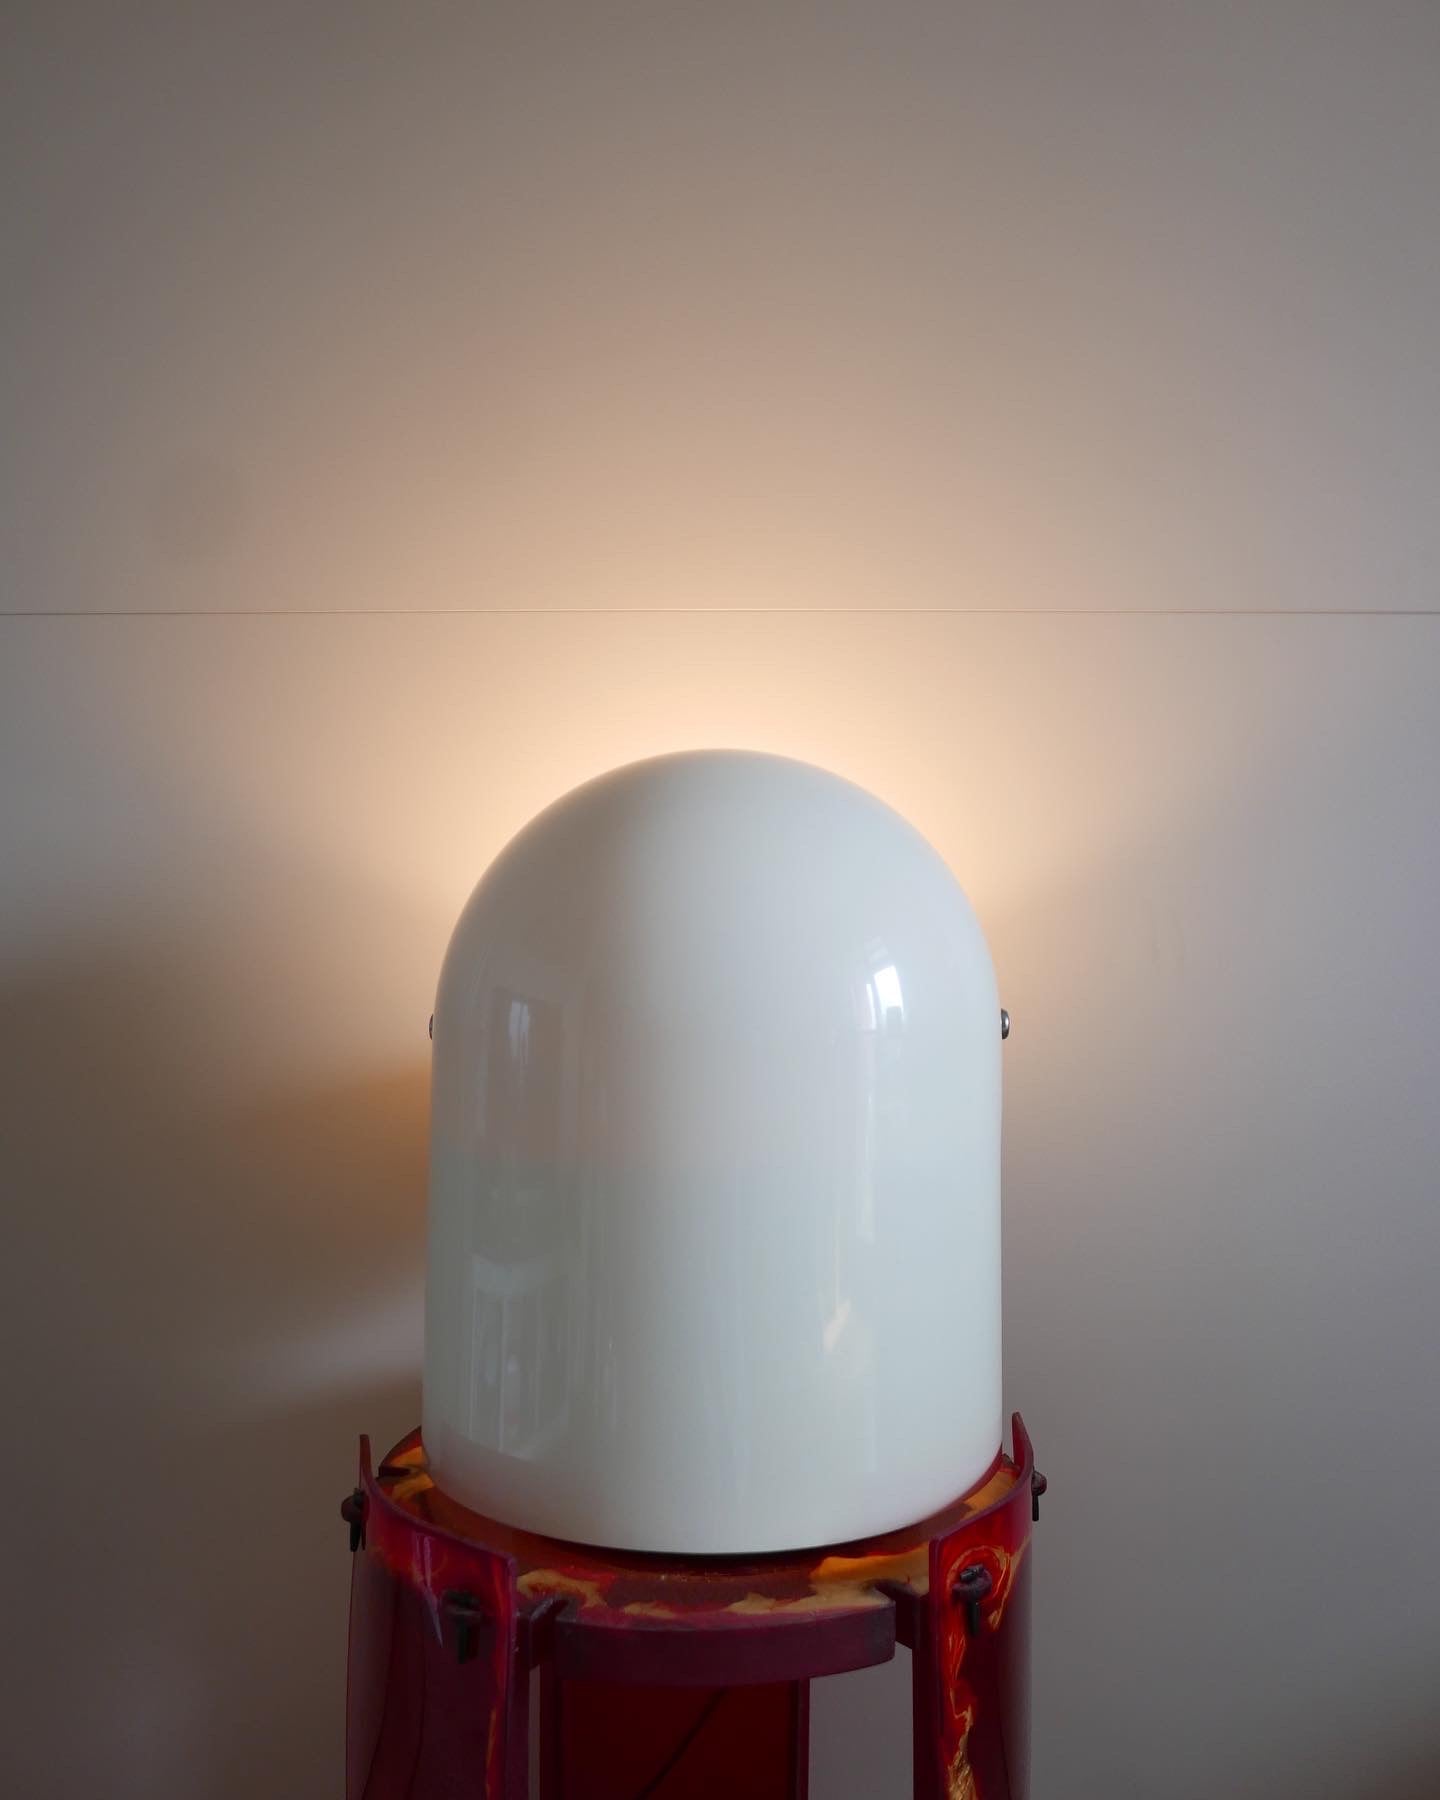 Mezzopileo Table Lamp by Gae Aulenti for Artemide, 1972